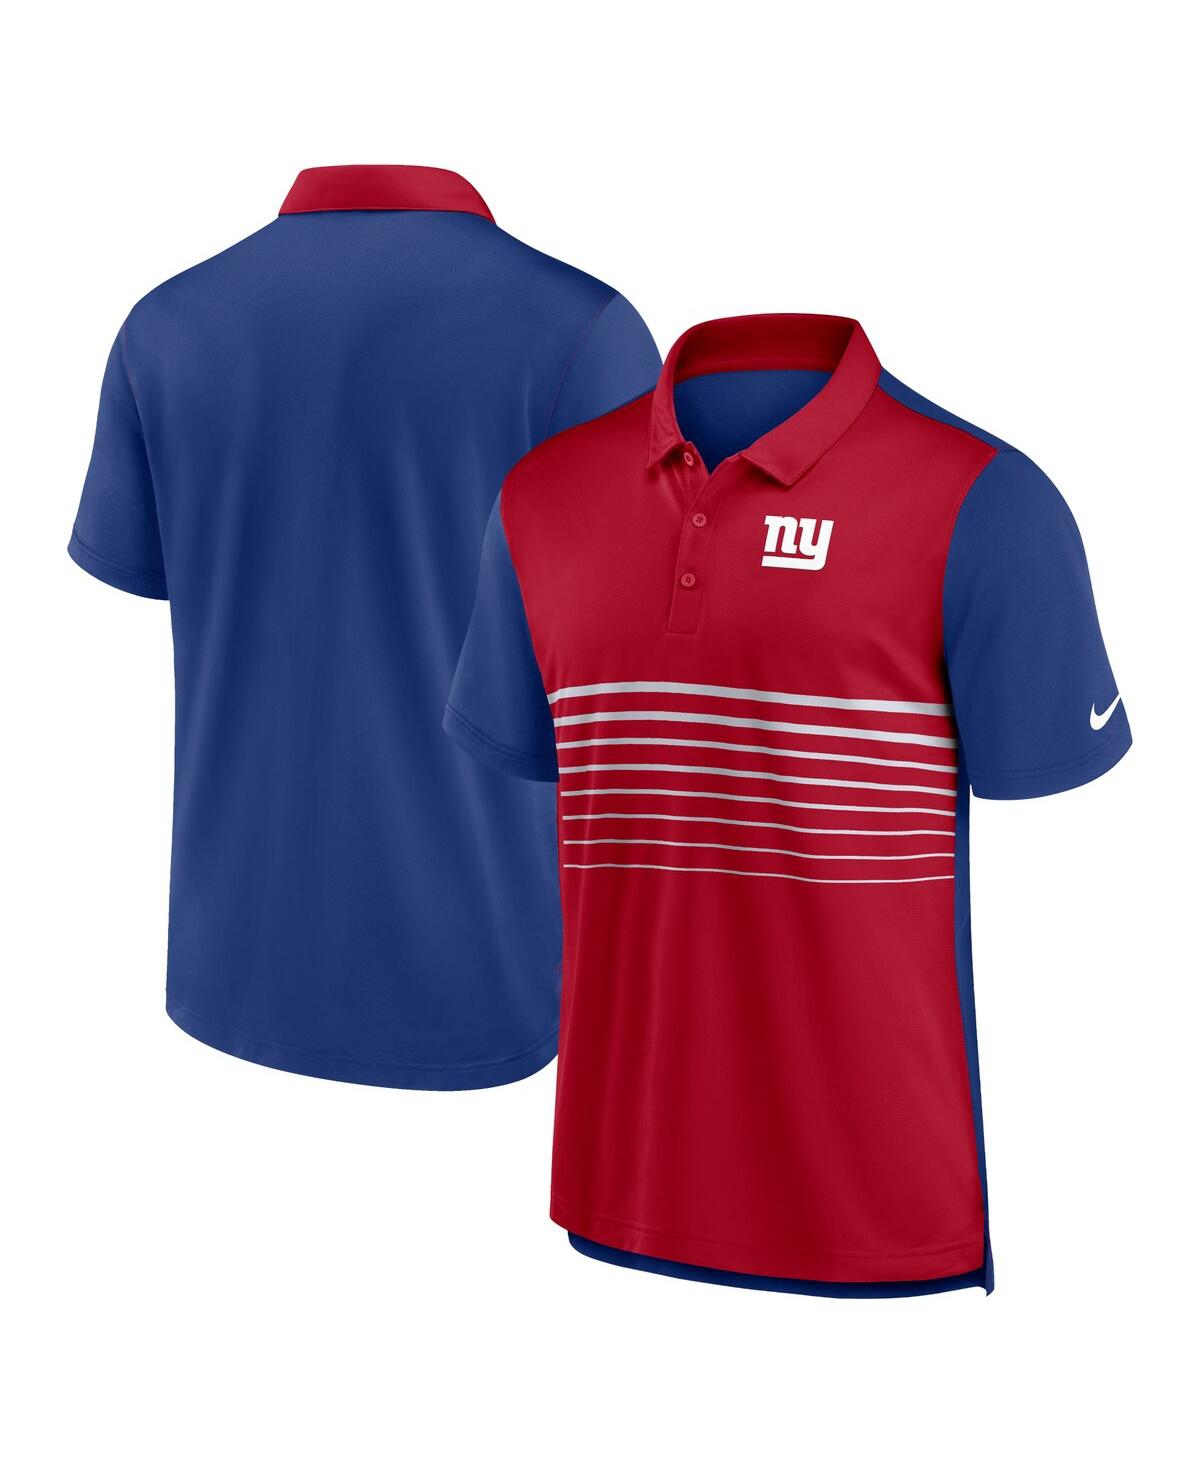 Men's Nike Royal, Red New York Giants Fashion Performance Polo Shirt - Royal, Red